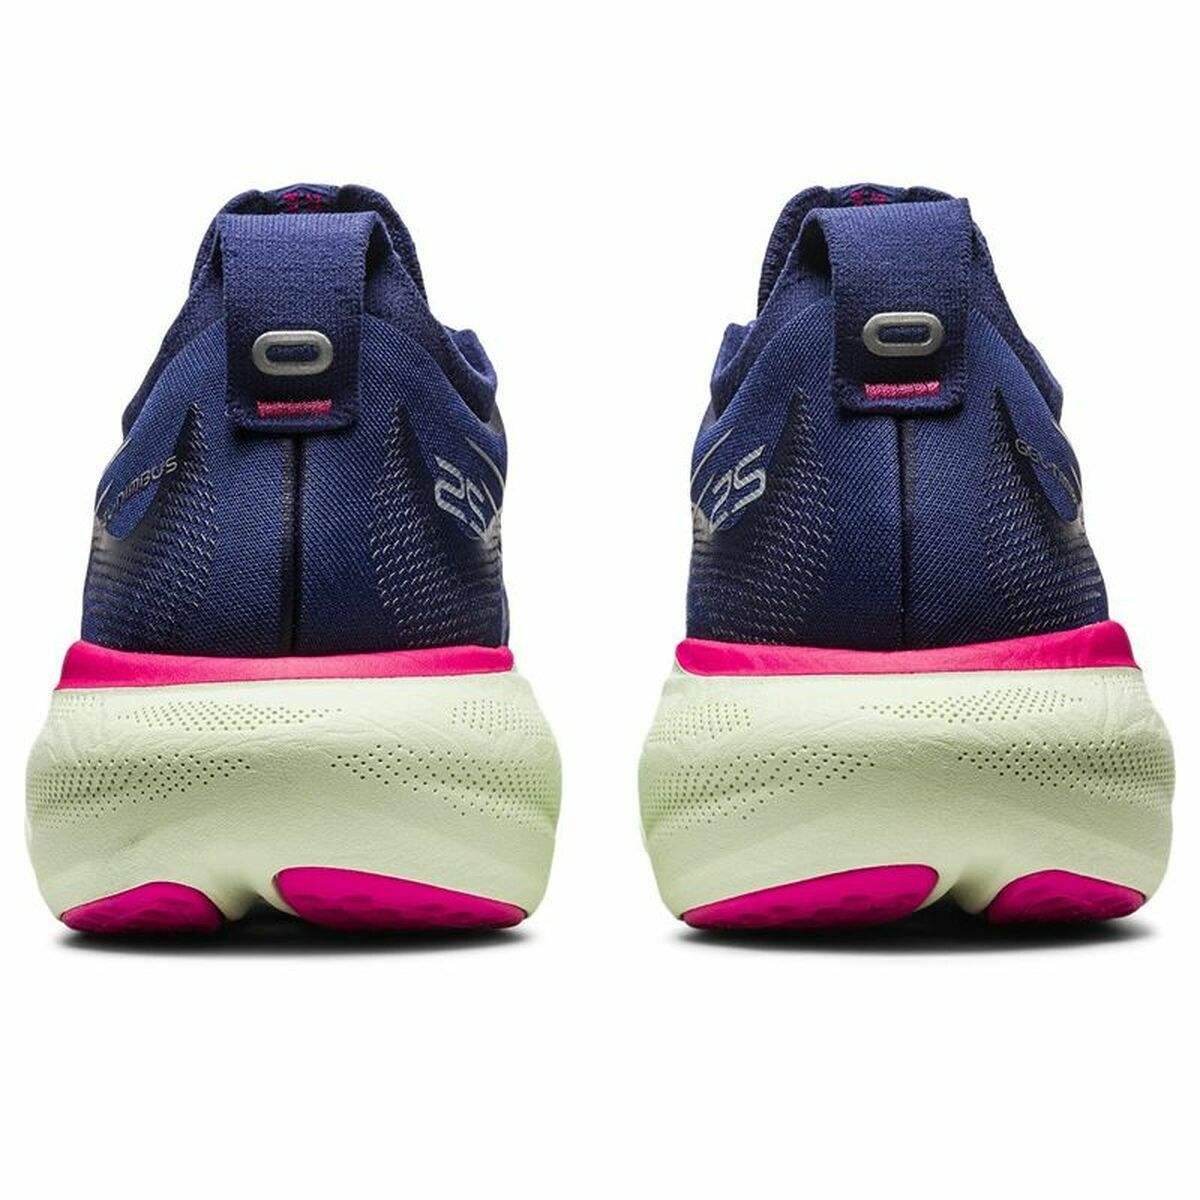 Chaussures de Running pour Adultes Asics Gel-Nimbus 25 Femme Blue marine - Asics - Jardin D'Eyden - jardindeyden.fr